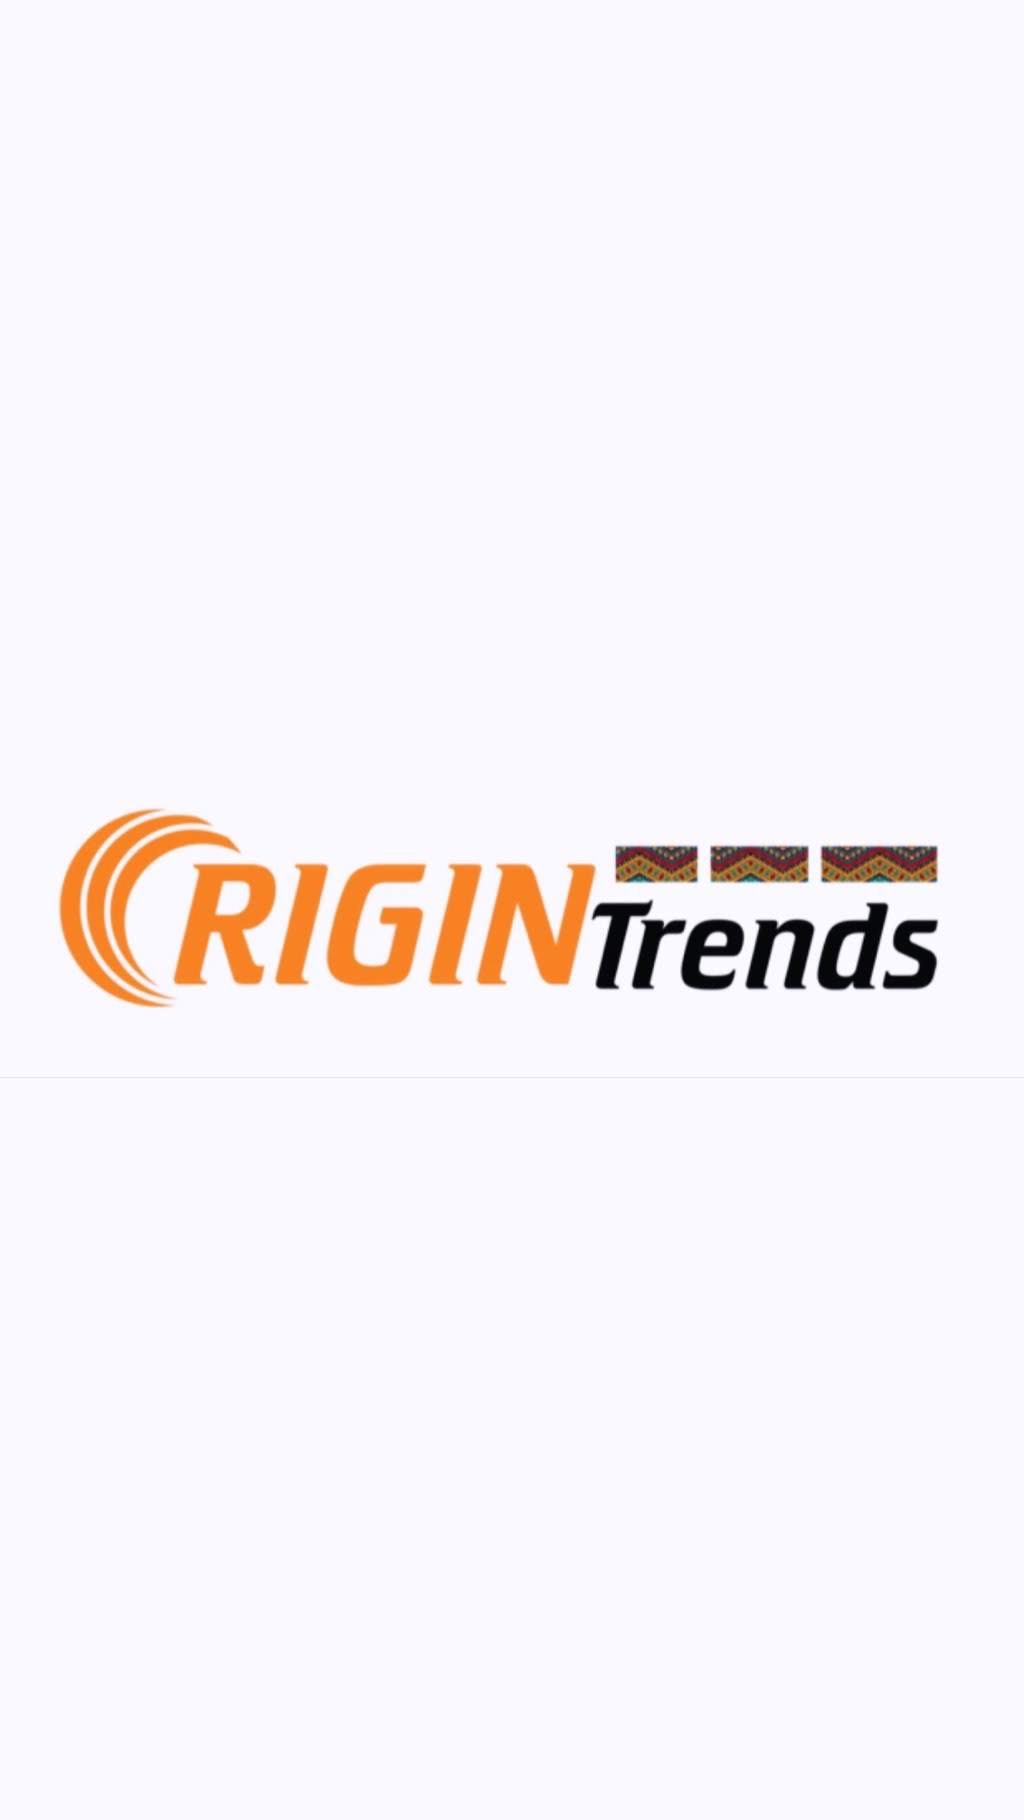 Origin Trends